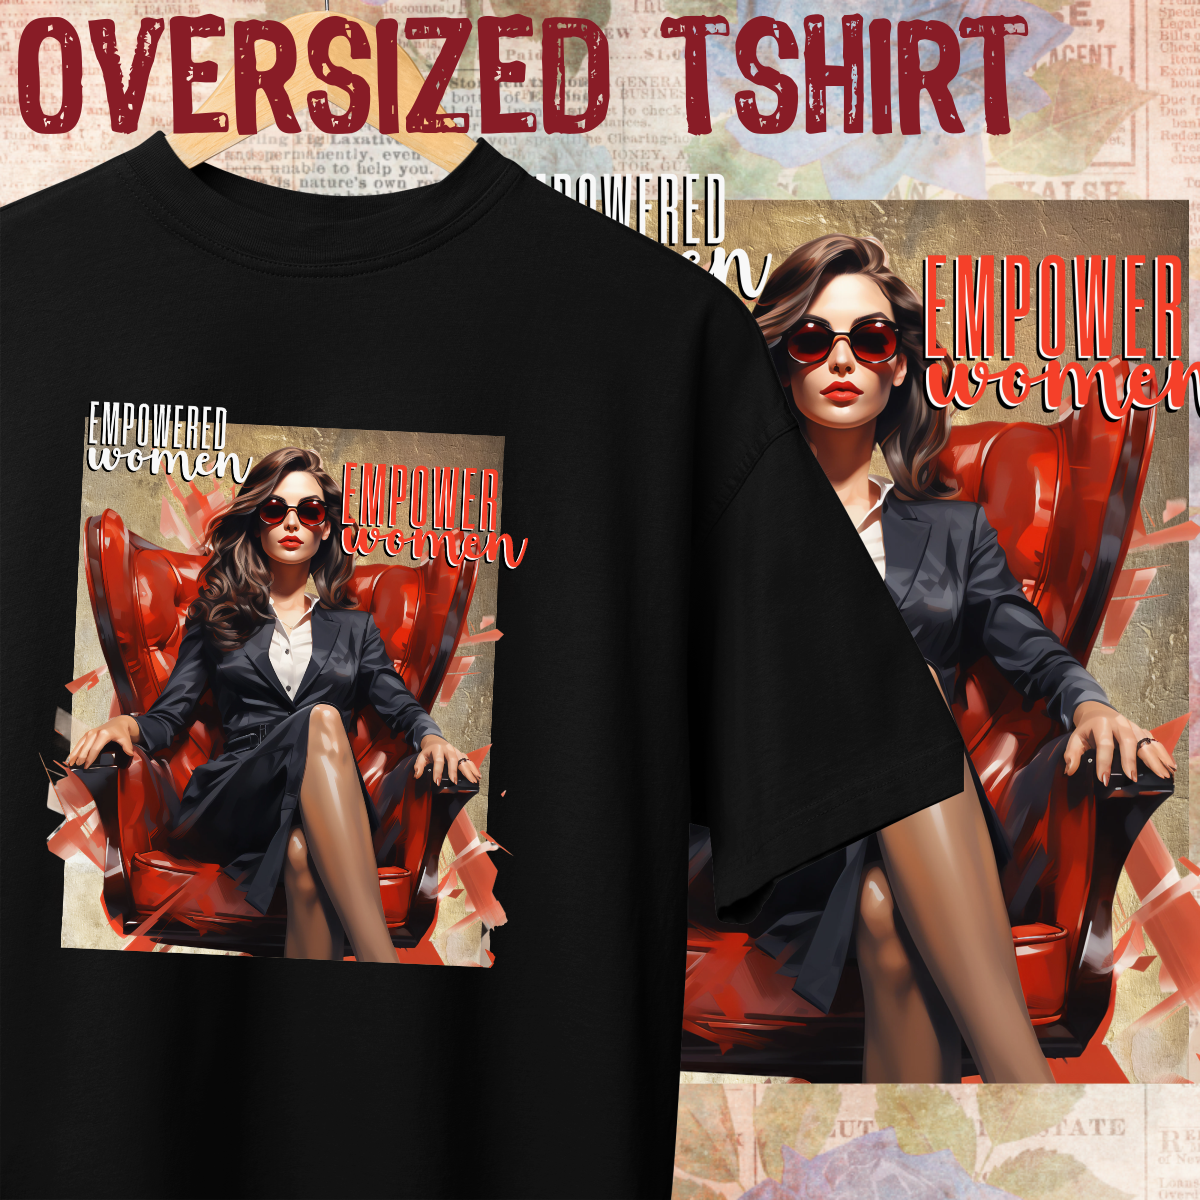 Nome do produto: Oversized tshirt - Empowered Women - Seremcores